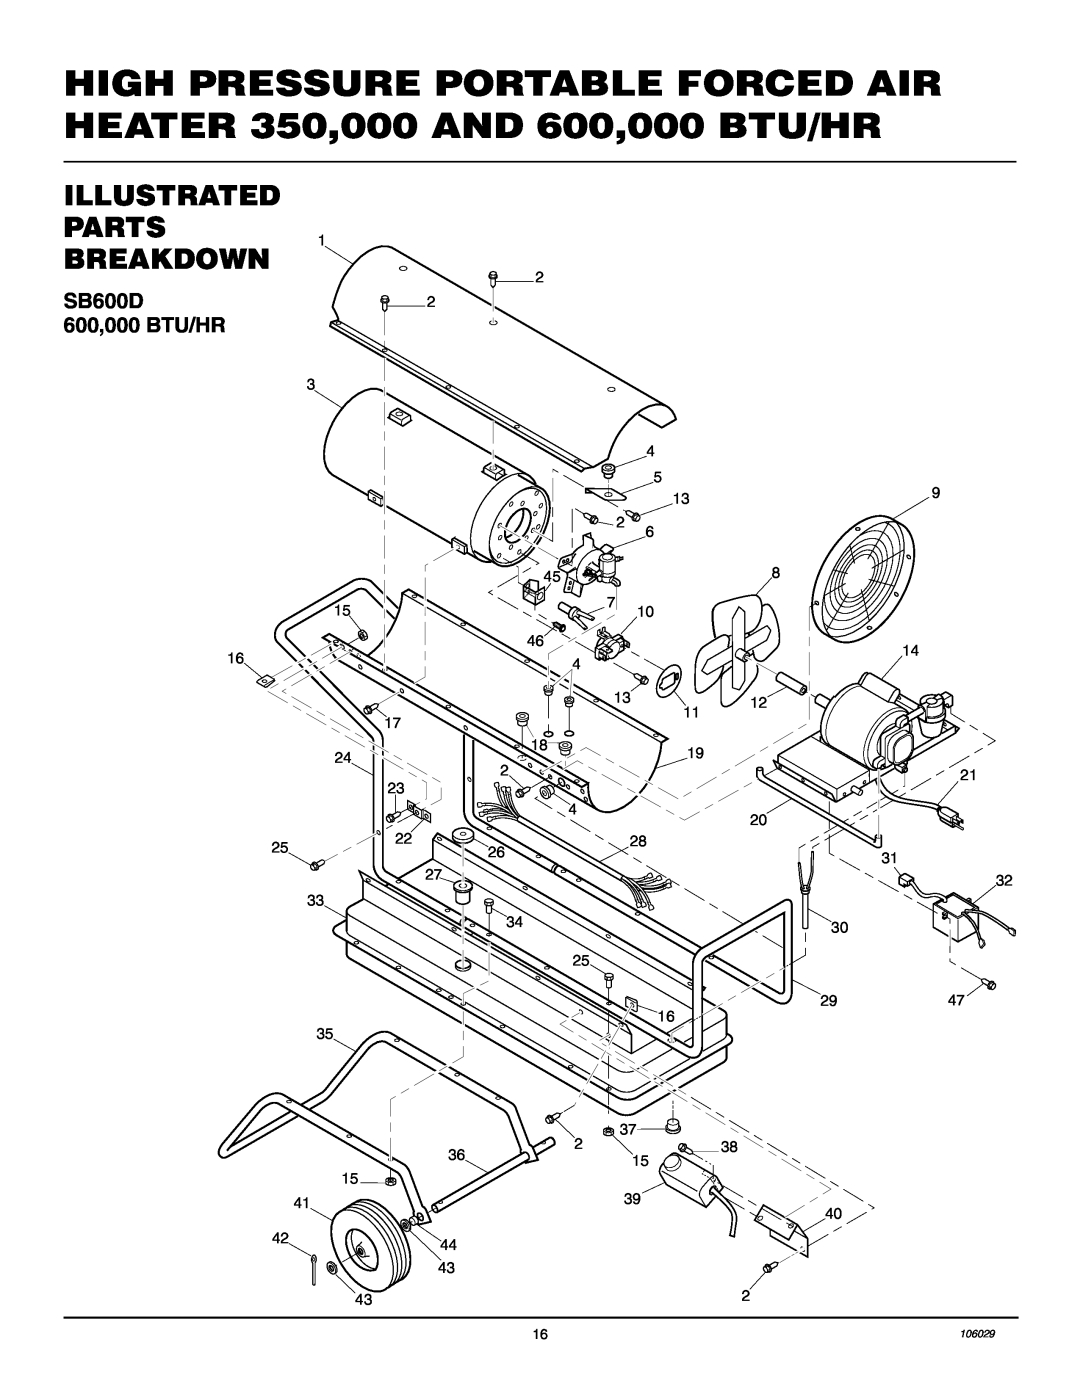 Desa SB350D owner manual SB600D 600,000 BTU/HR, Illustrated Parts Breakdown 